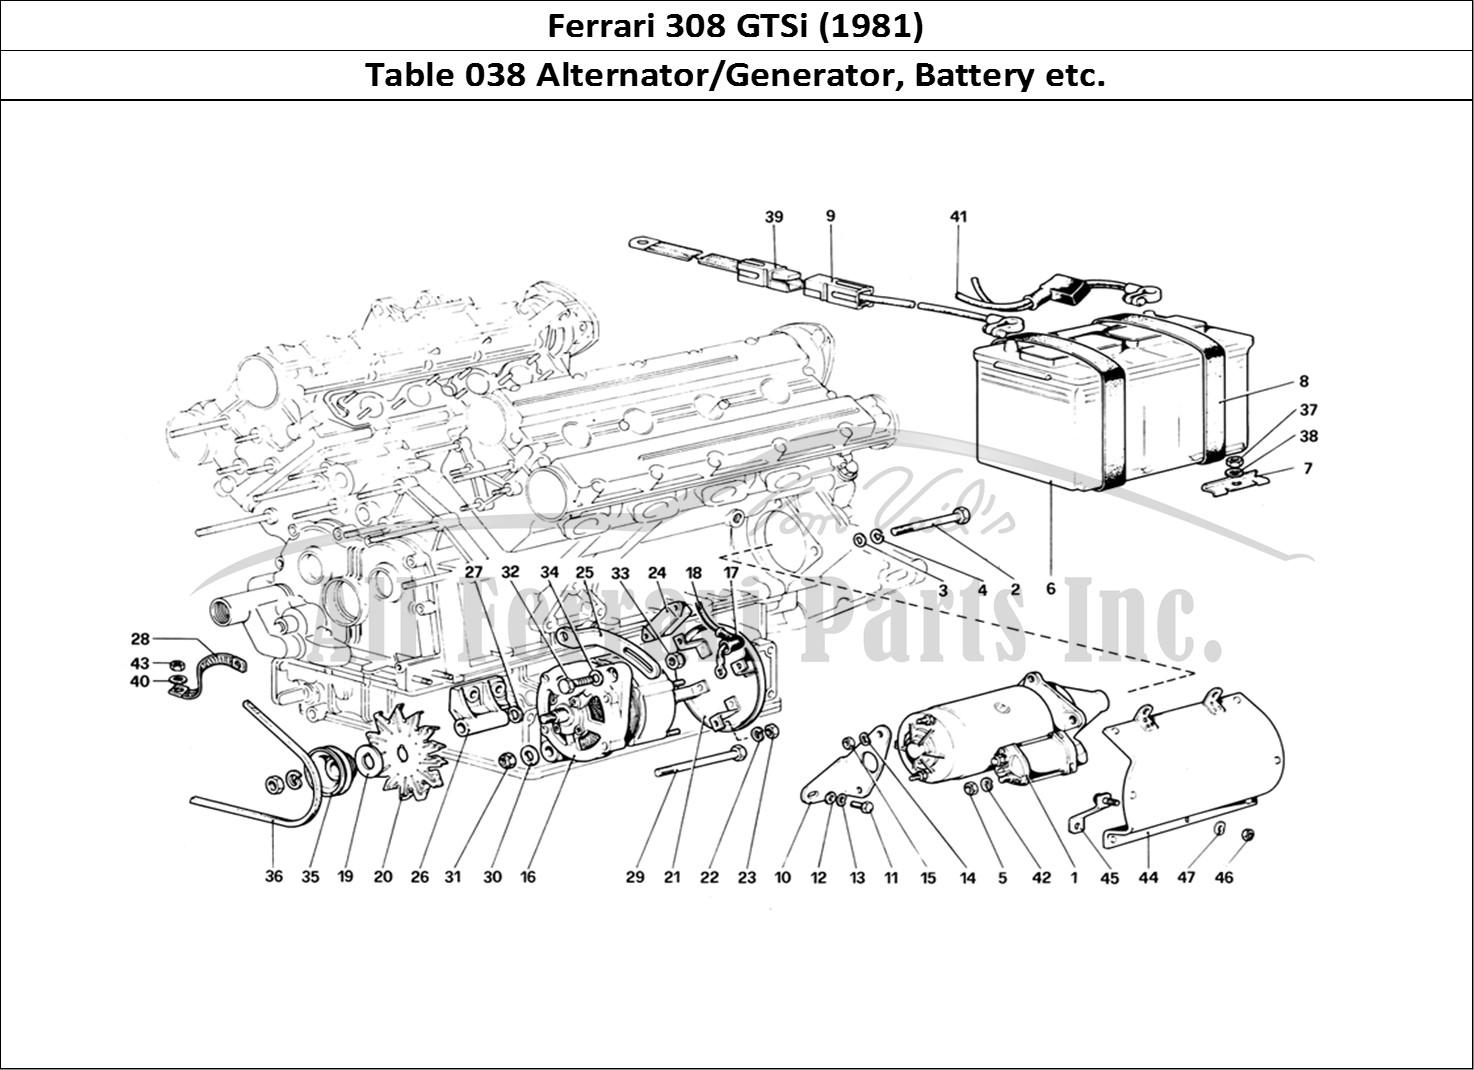 Ferrari Parts Ferrari 308 GTBi (1981) Page 038 Electric Generating Syste